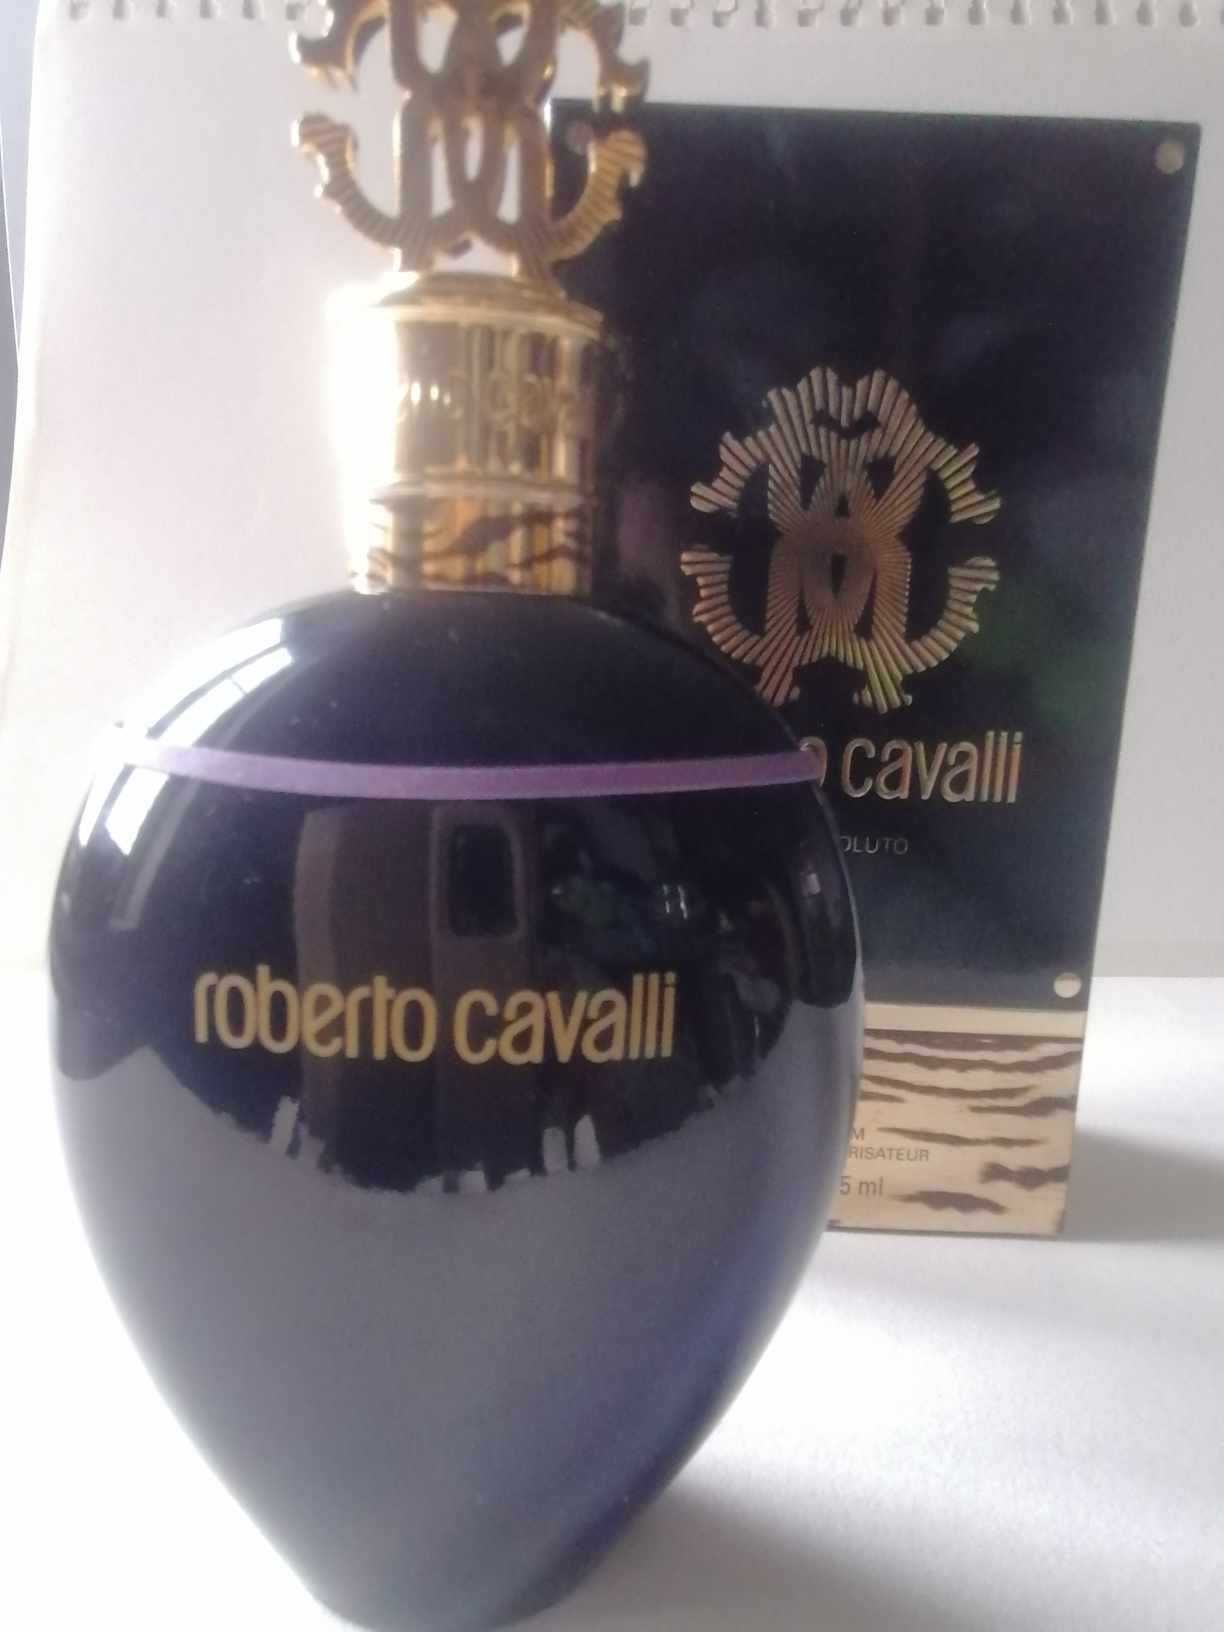 Roberto Cavalli Hero Assoluto 75 ml